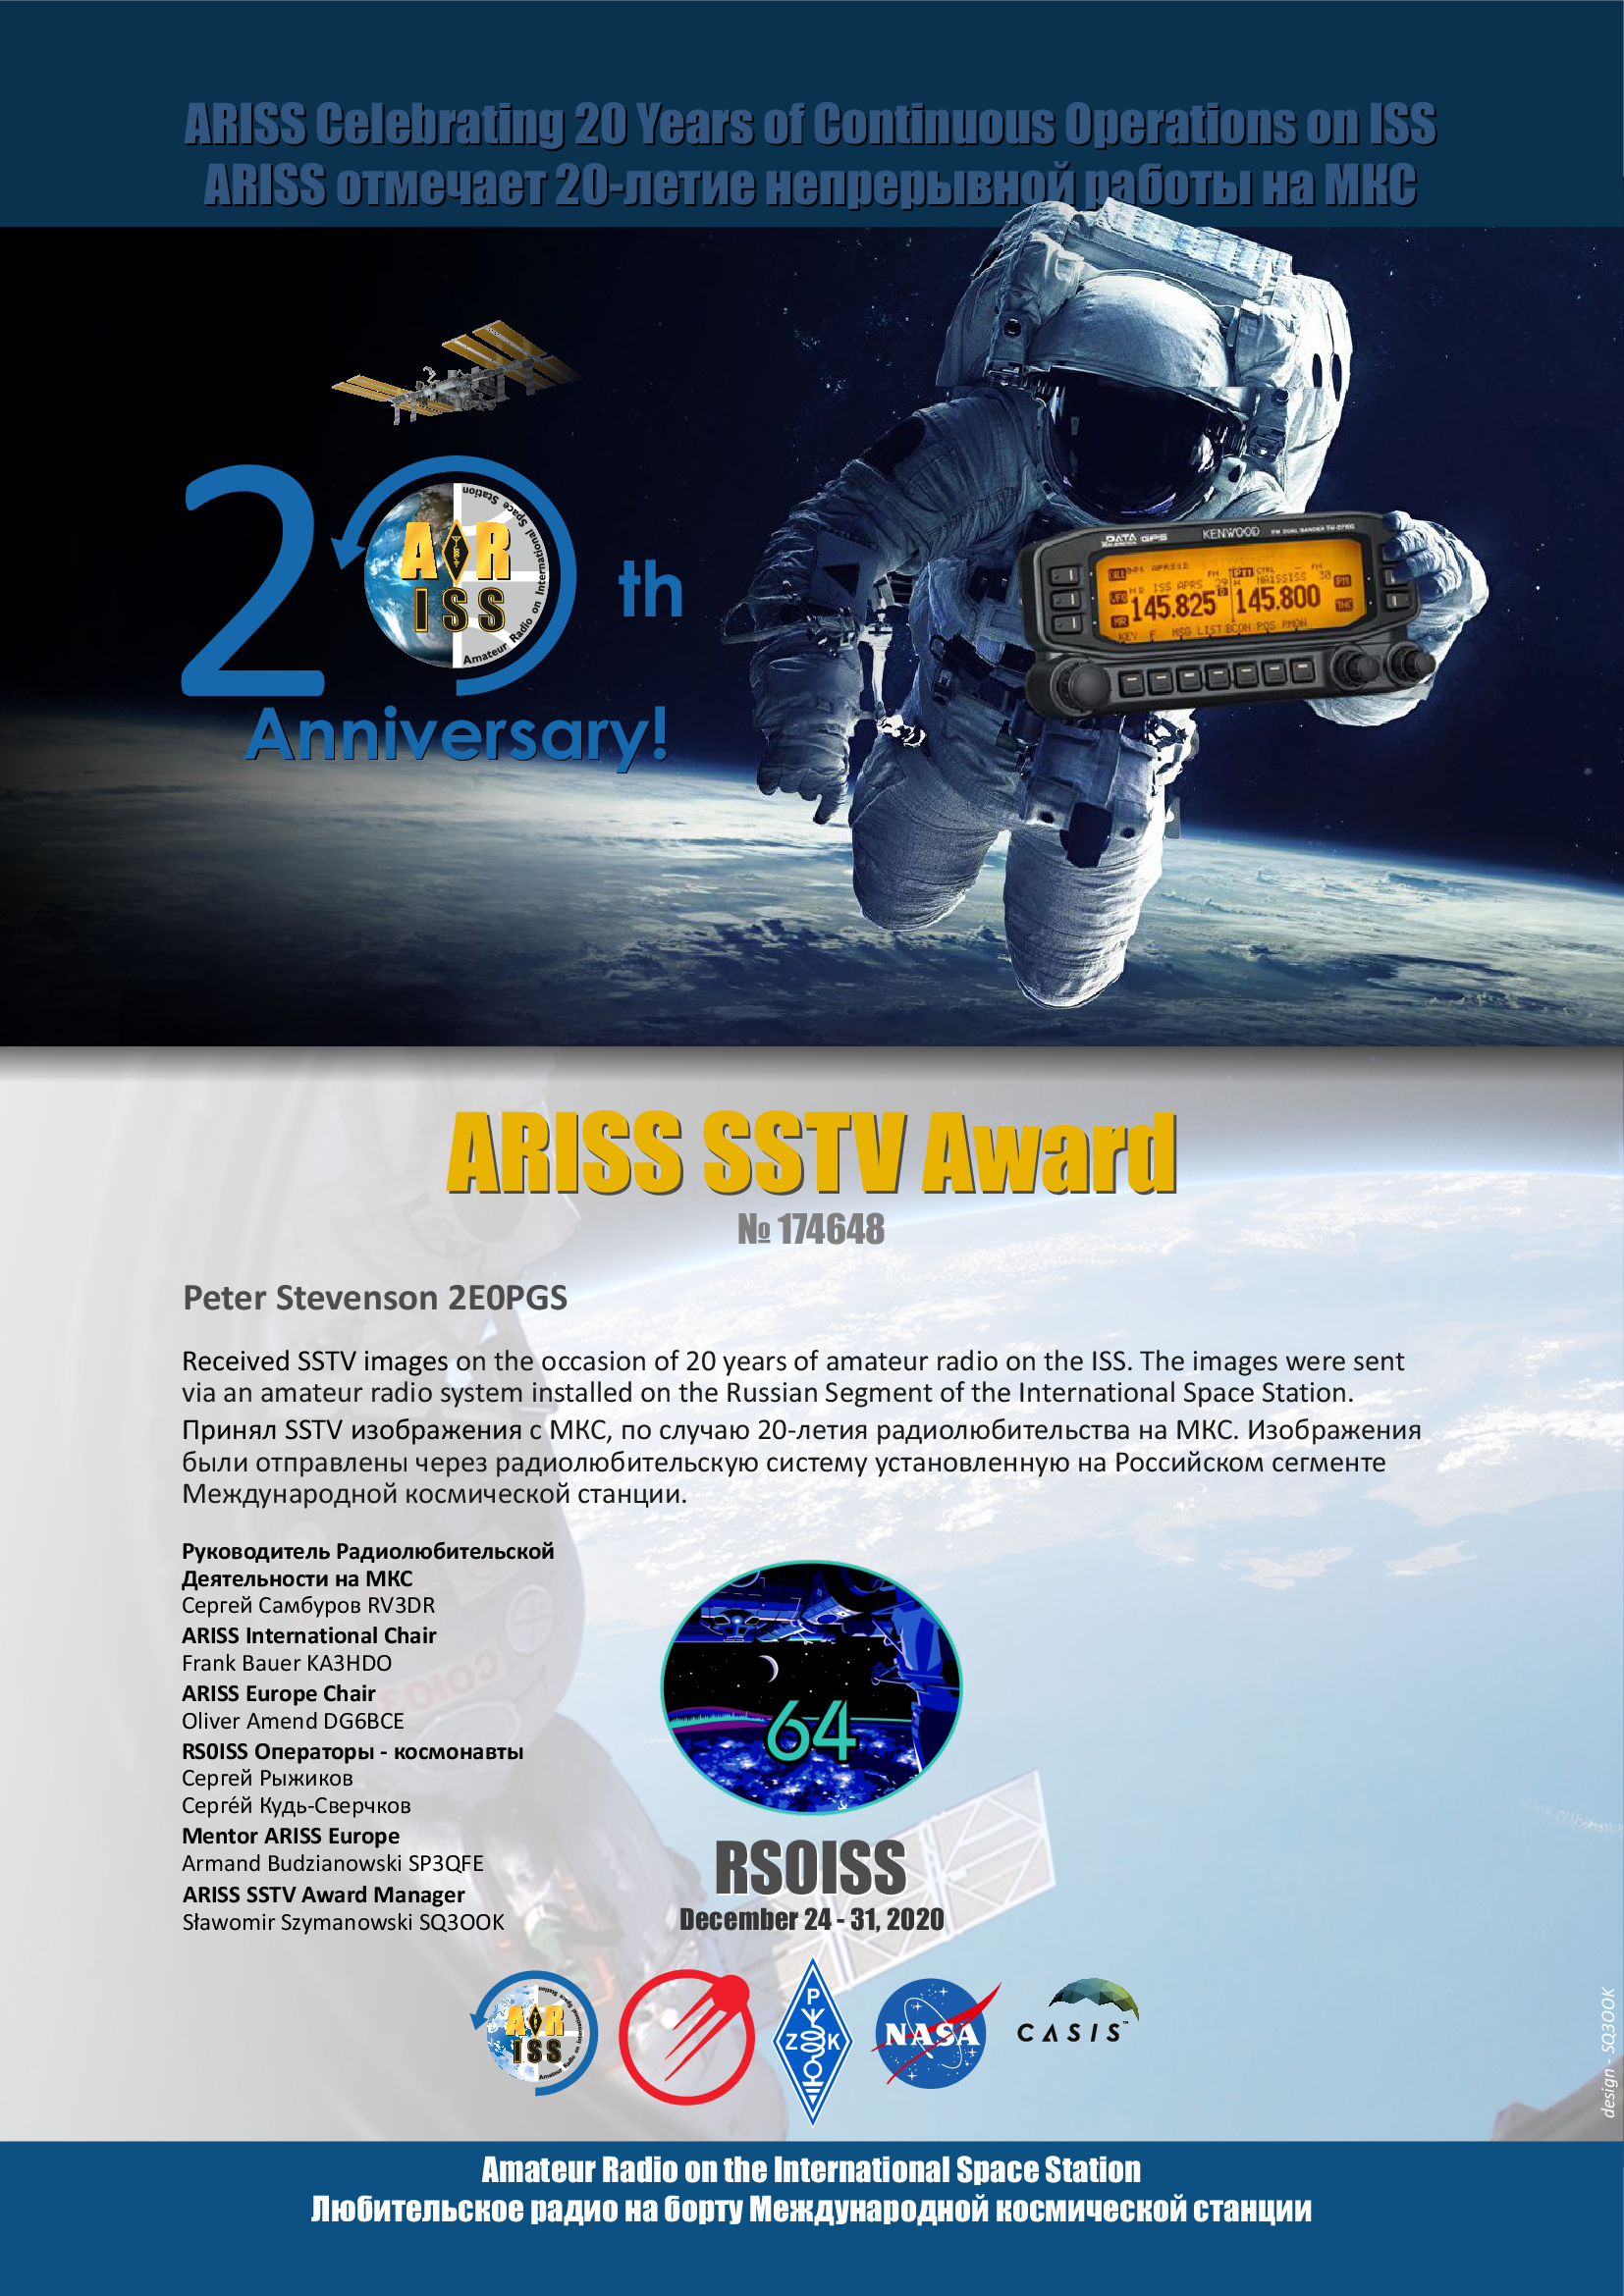 ariss-sstv-award-2e0pgs